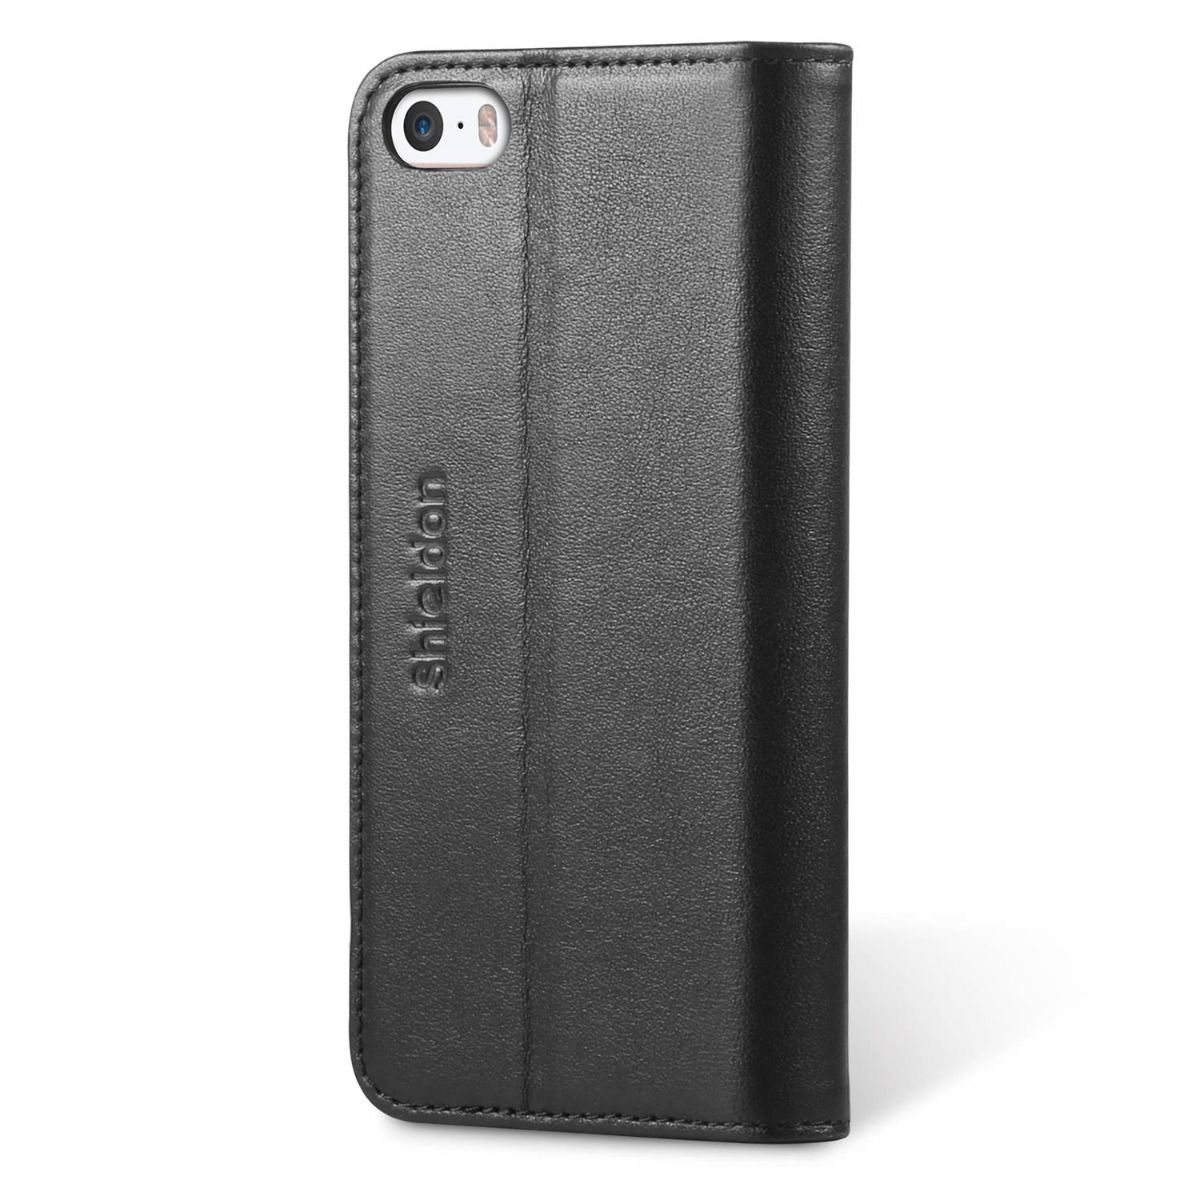 DOSH SYNCRO Core compact men's designer iPhone 5/5S wallet case sleeve 